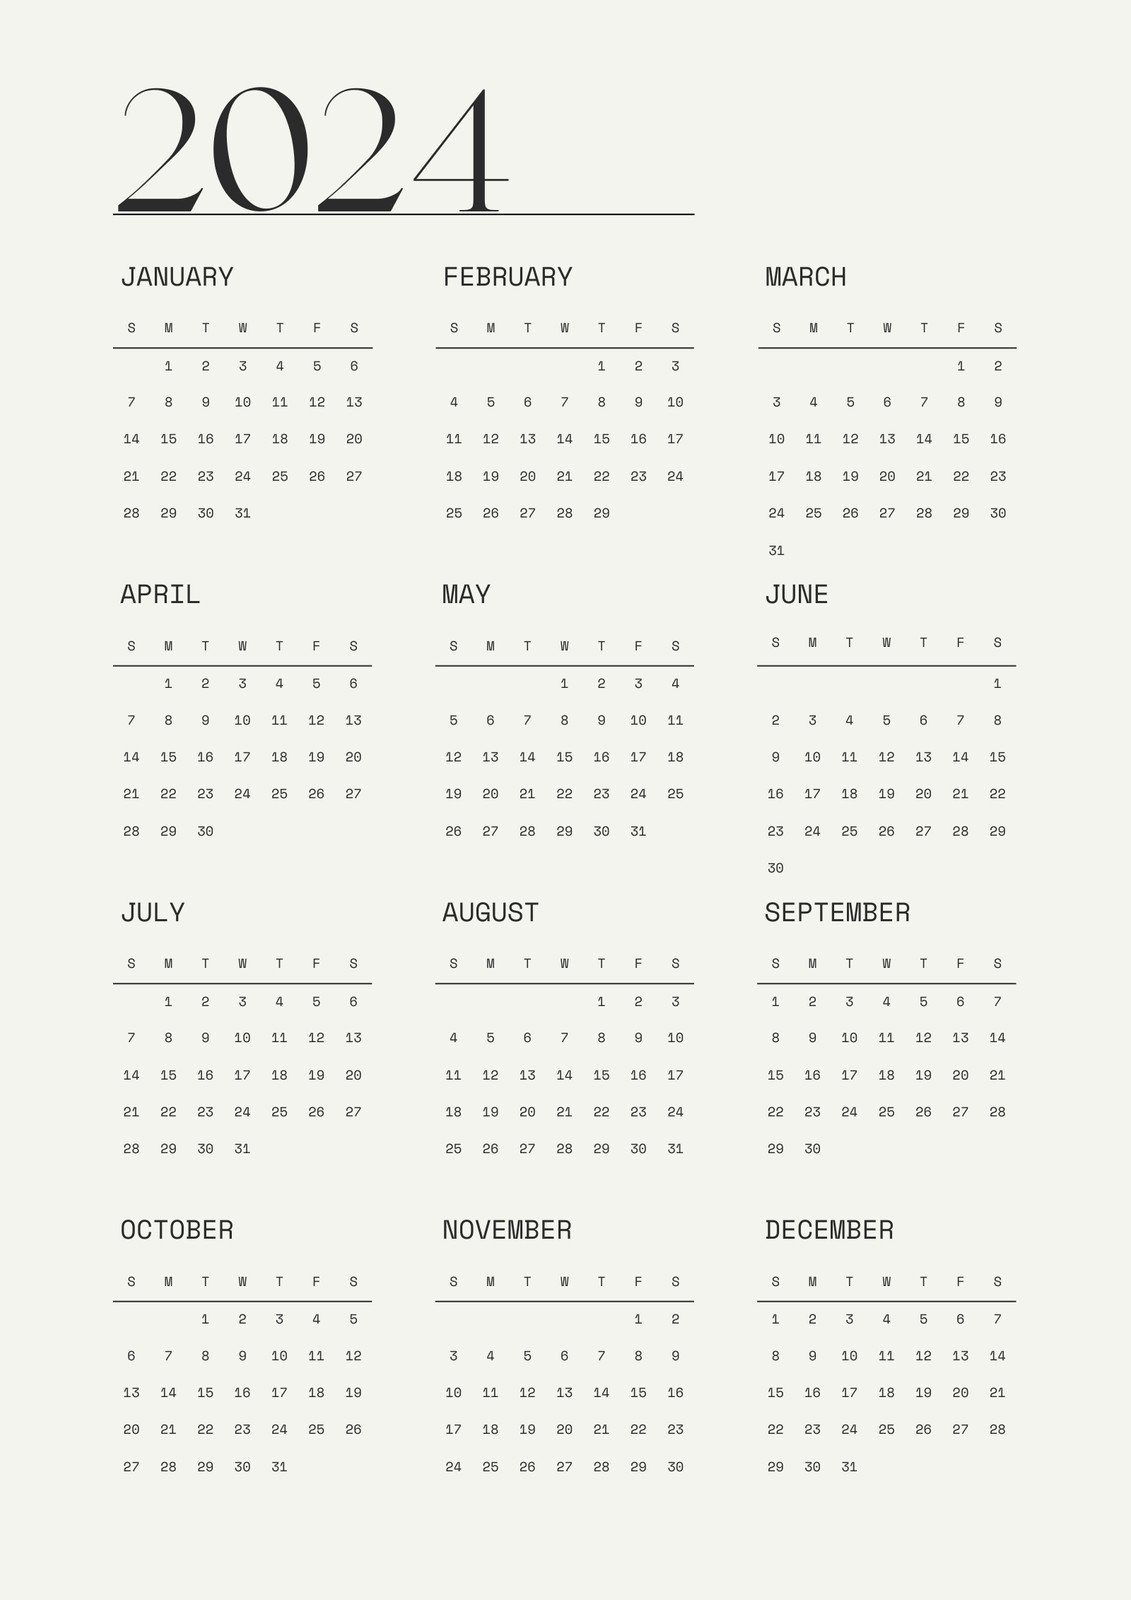 https://marketplace.canva.com/EAFXW3HfEOM/3/0/1131w/canva-grey-black-sleek-modern-feminine-2024-annual-calendar-planner-0tavwl5Cd2s.jpg